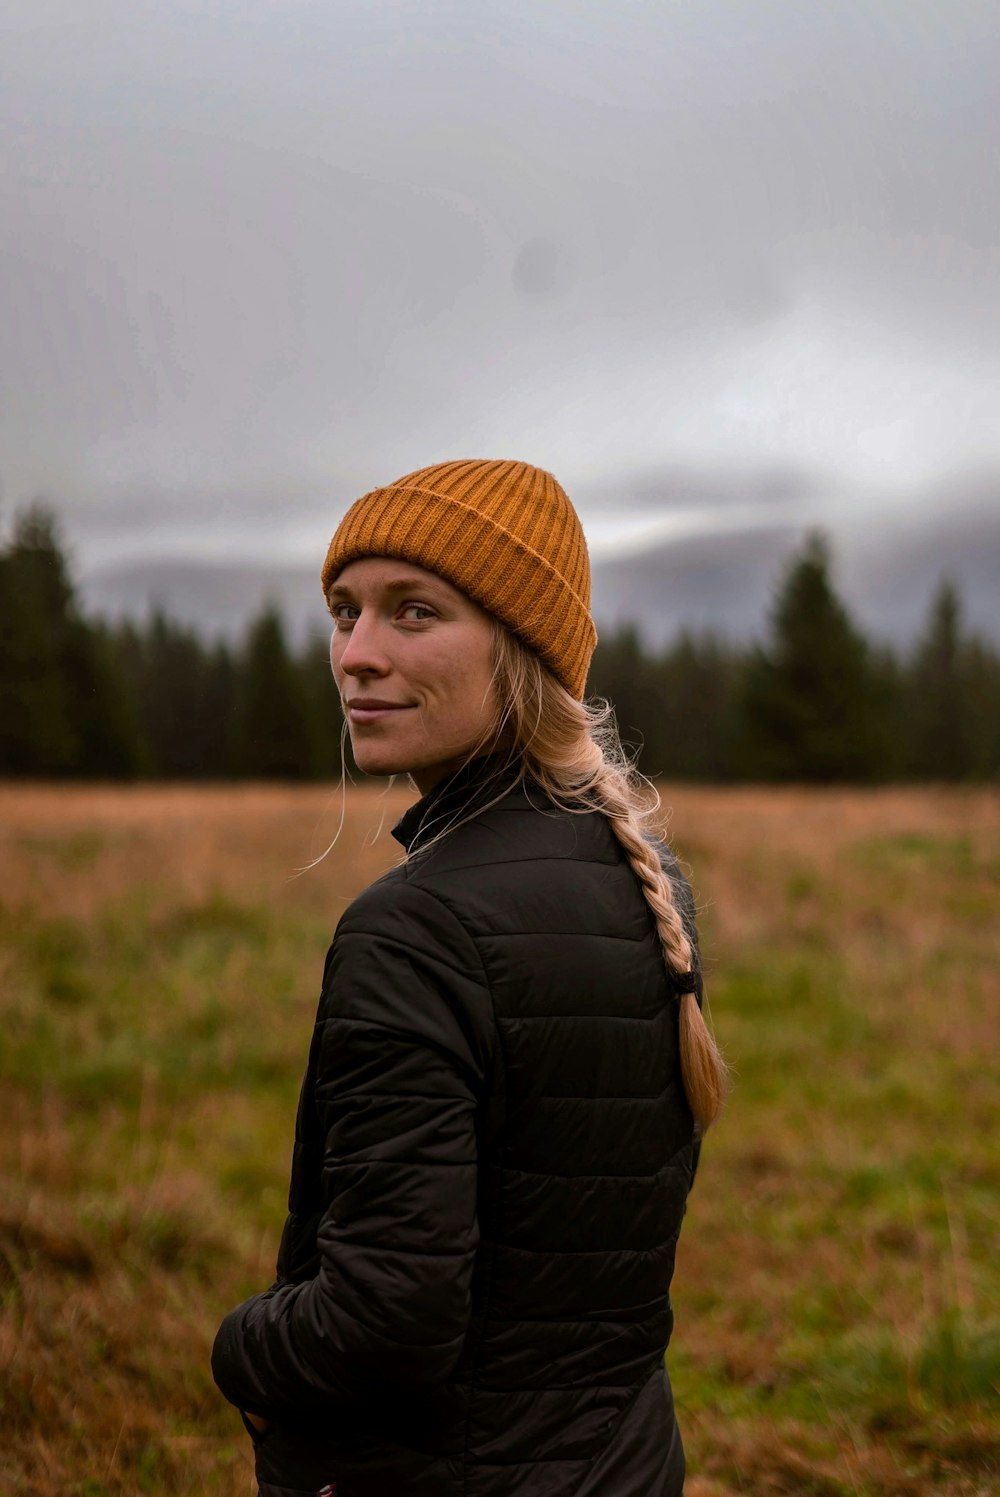 a woman standing in a field wearing a hat